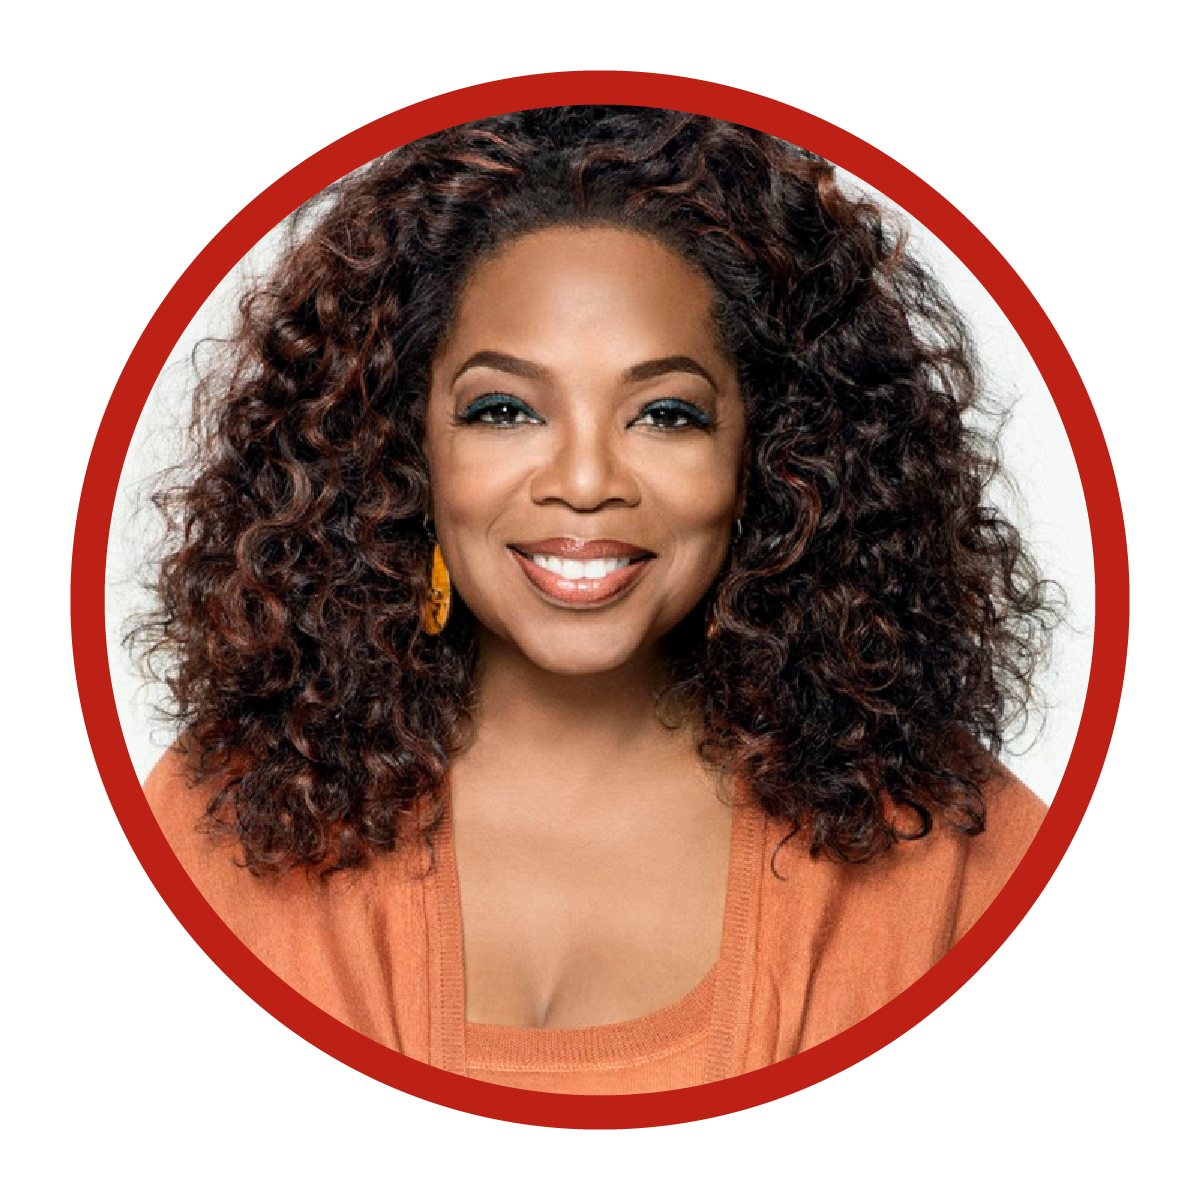 Oprah_profile FINAL-01.png